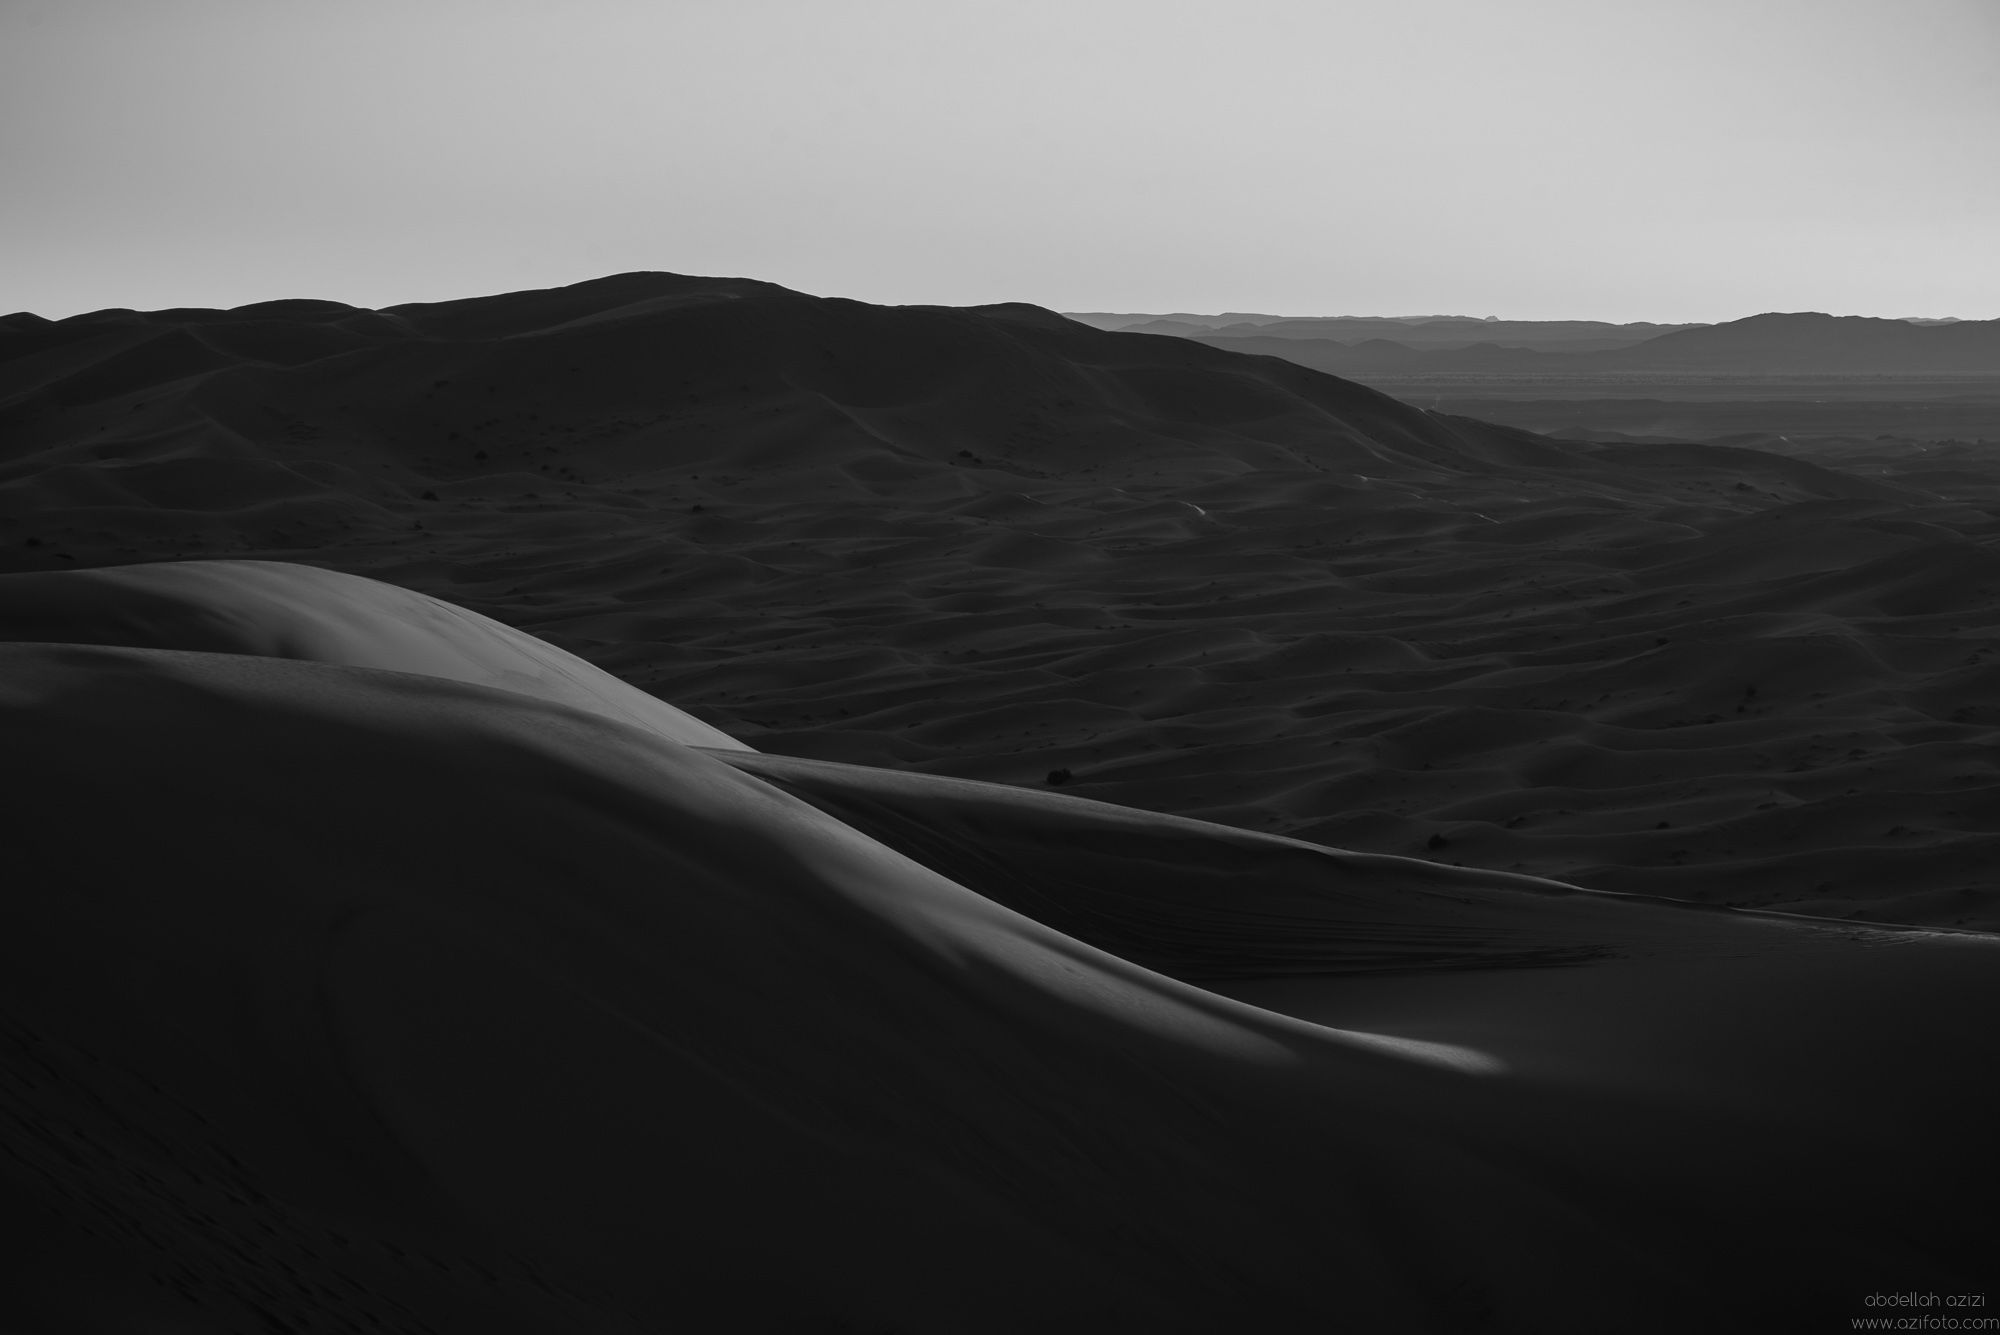 Sand dunes, Black and White Photo